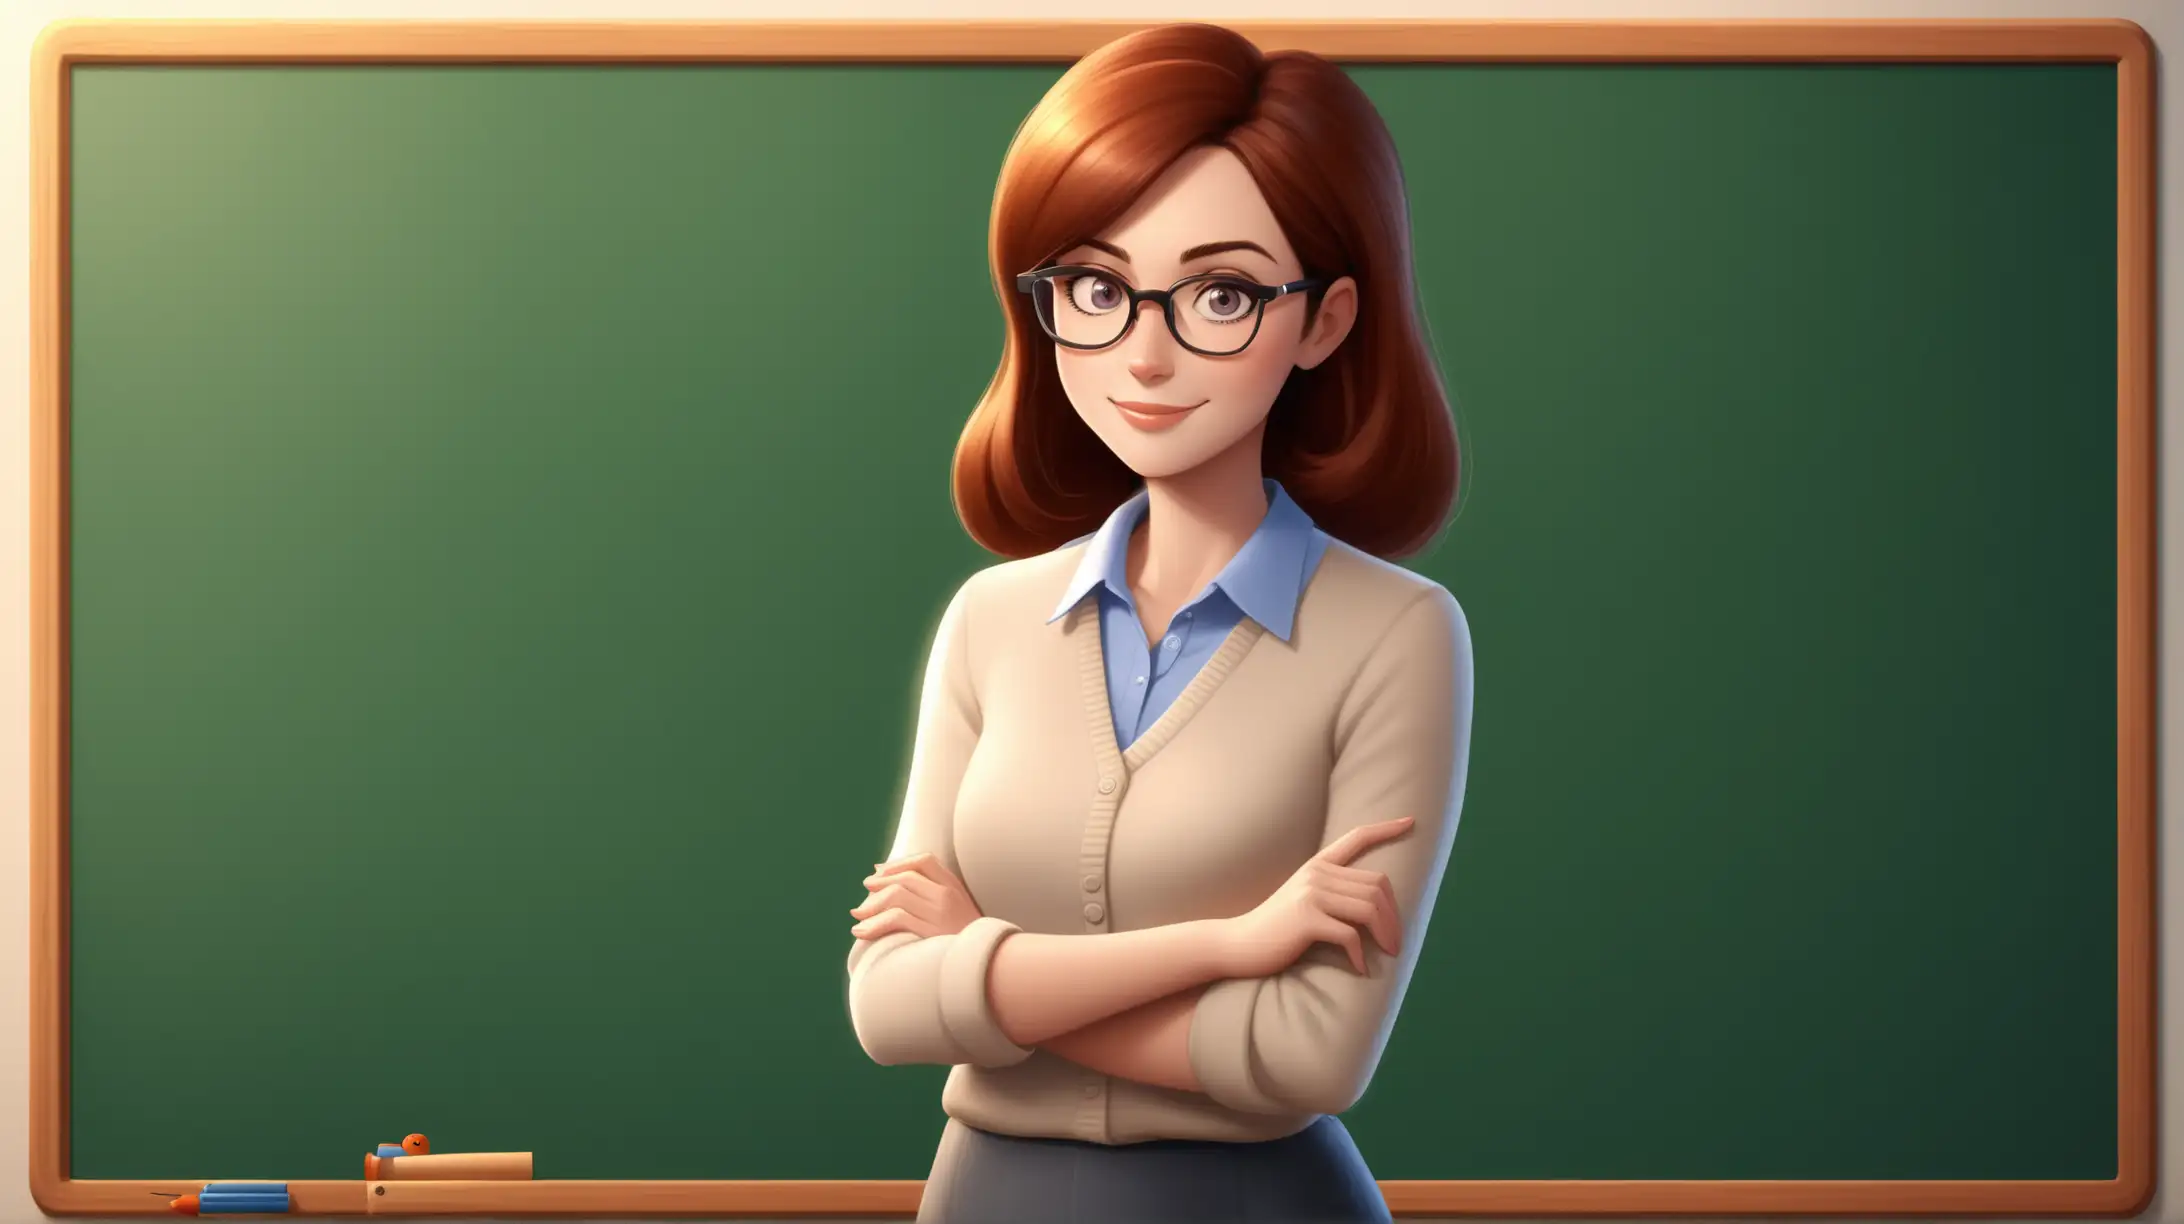 Smiling Female Teacher in PixarStyle Classroom Portrait